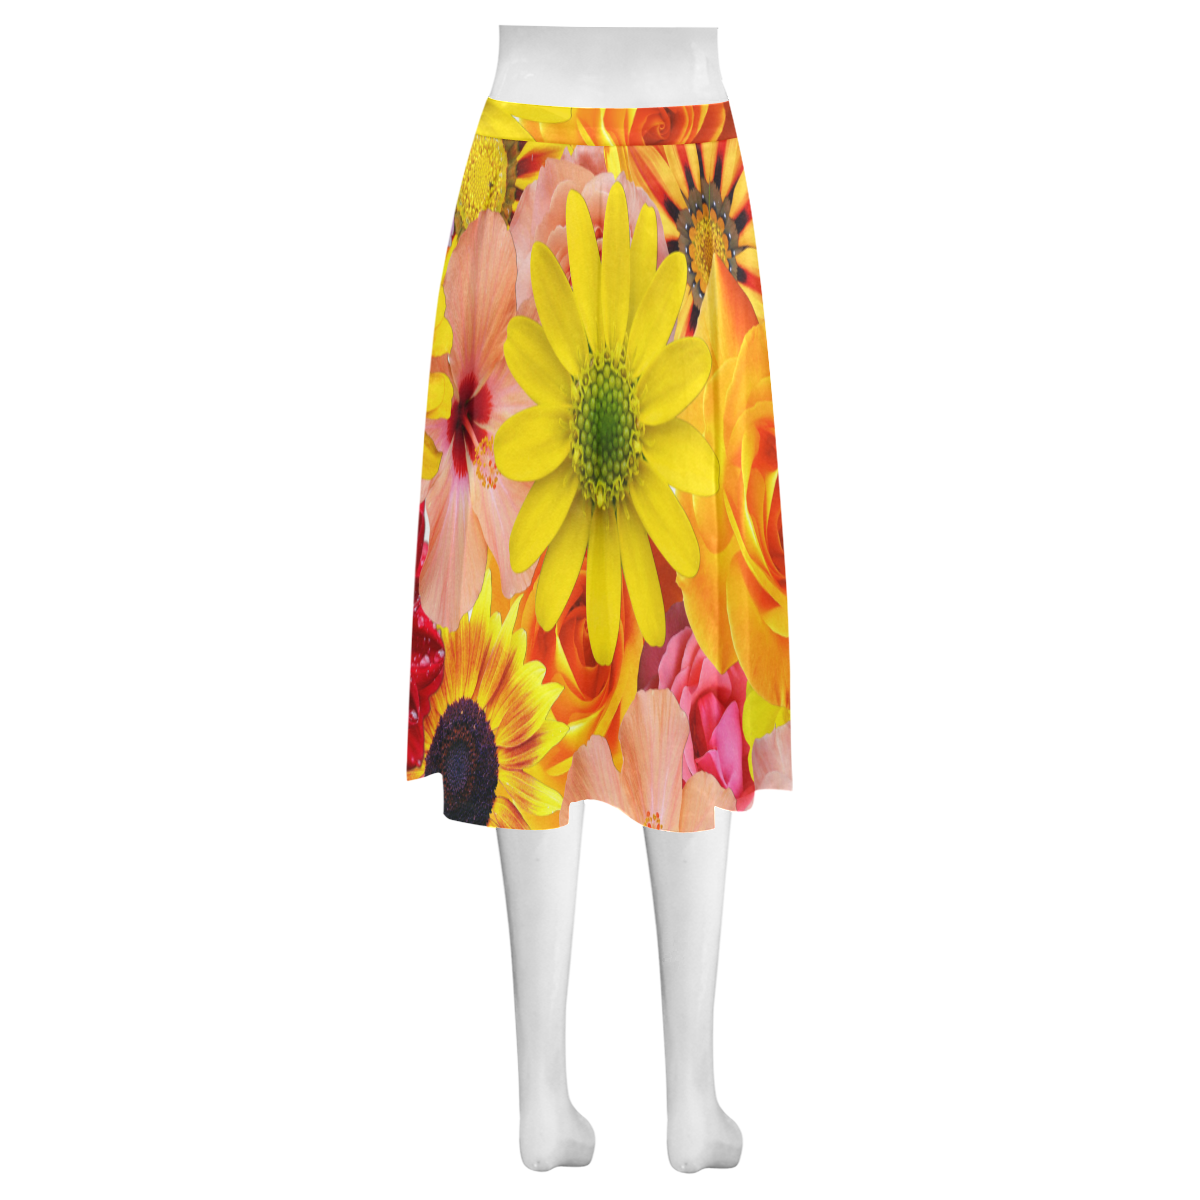 Orange flowers_ Gloria Sanchez1 Mnemosyne Women's Crepe Skirt (Model D16)